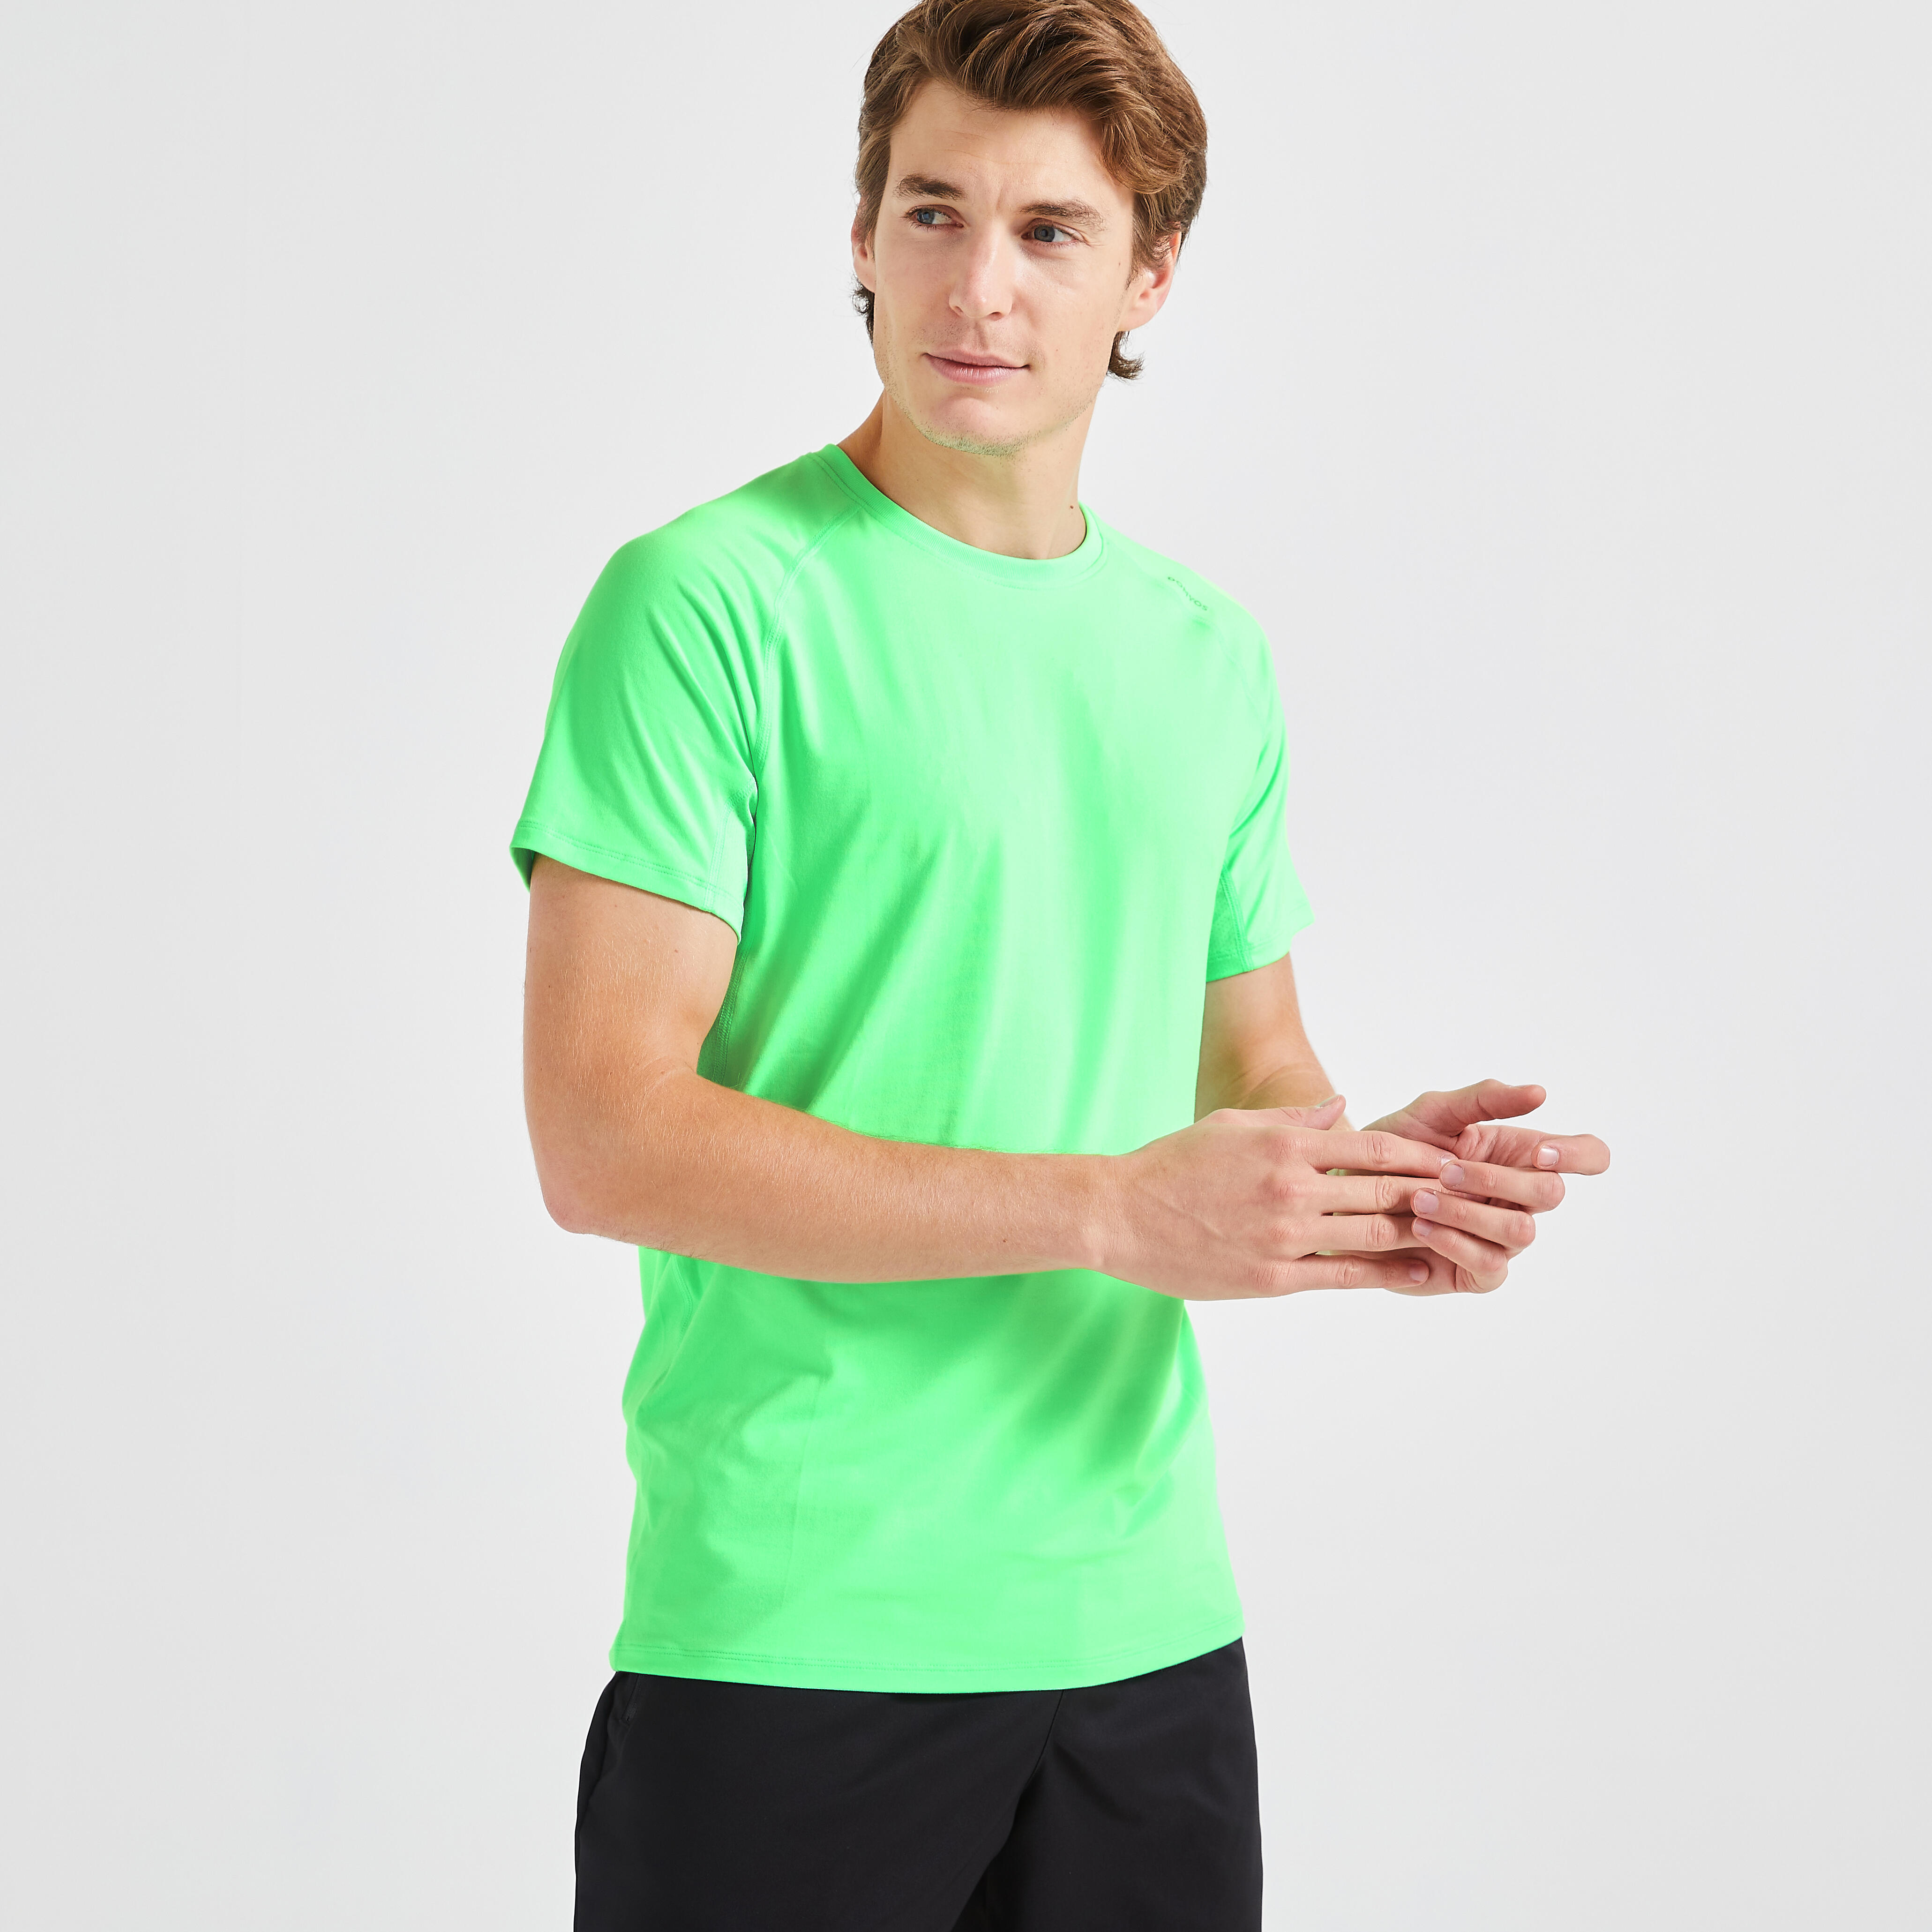 https://contents.mediadecathlon.com/p2170913/k$940ad51c2f2b7fa58b370cd56a296b5c/men-s-breathable-crew-neck-essential-fitness-t-shirt-neon-green-domyos-8669913.jpg